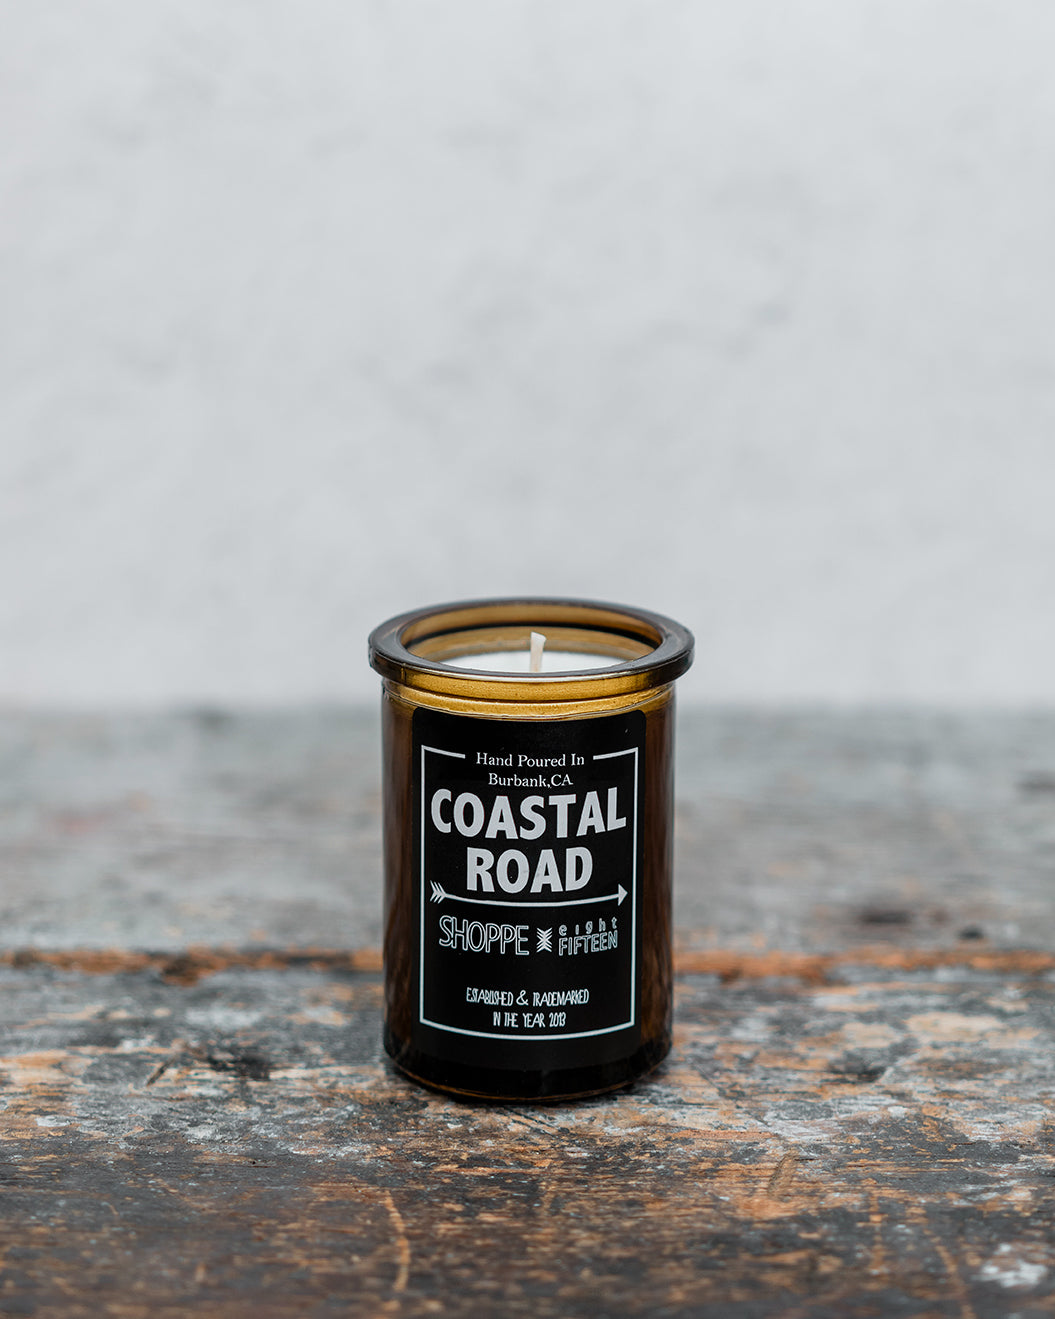 Coastal Road amber glass candle on wooden shelf